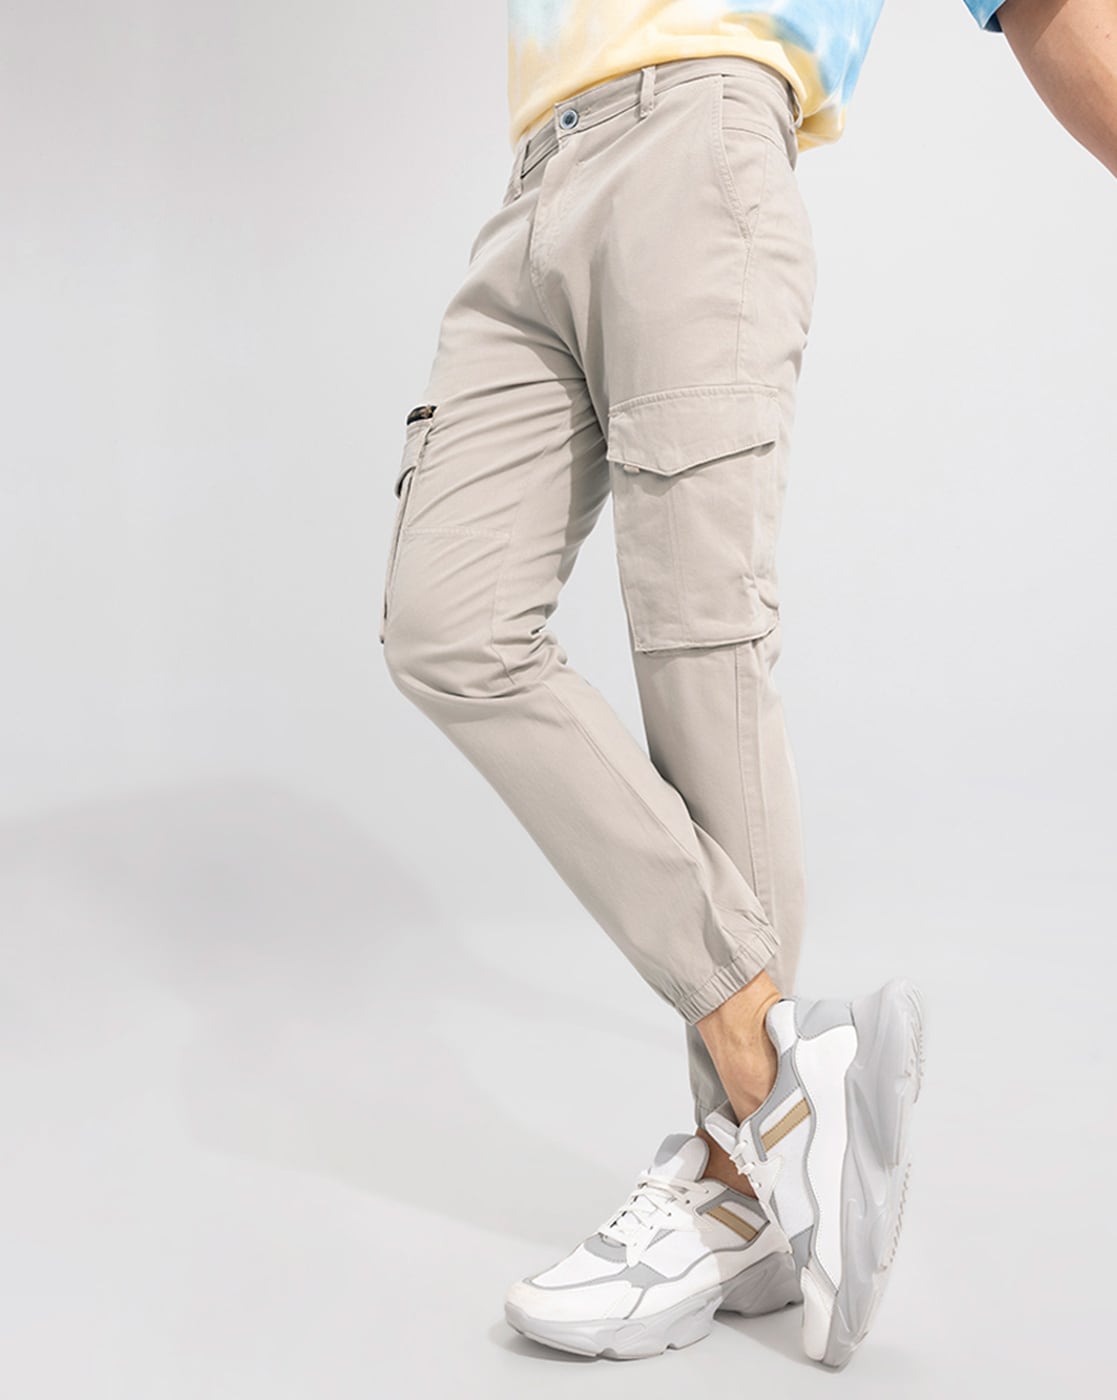 Ladies Cargo Pants Skinny Stretch Women's Jeans Green khaki 6 8 10 12 14 |  eBay